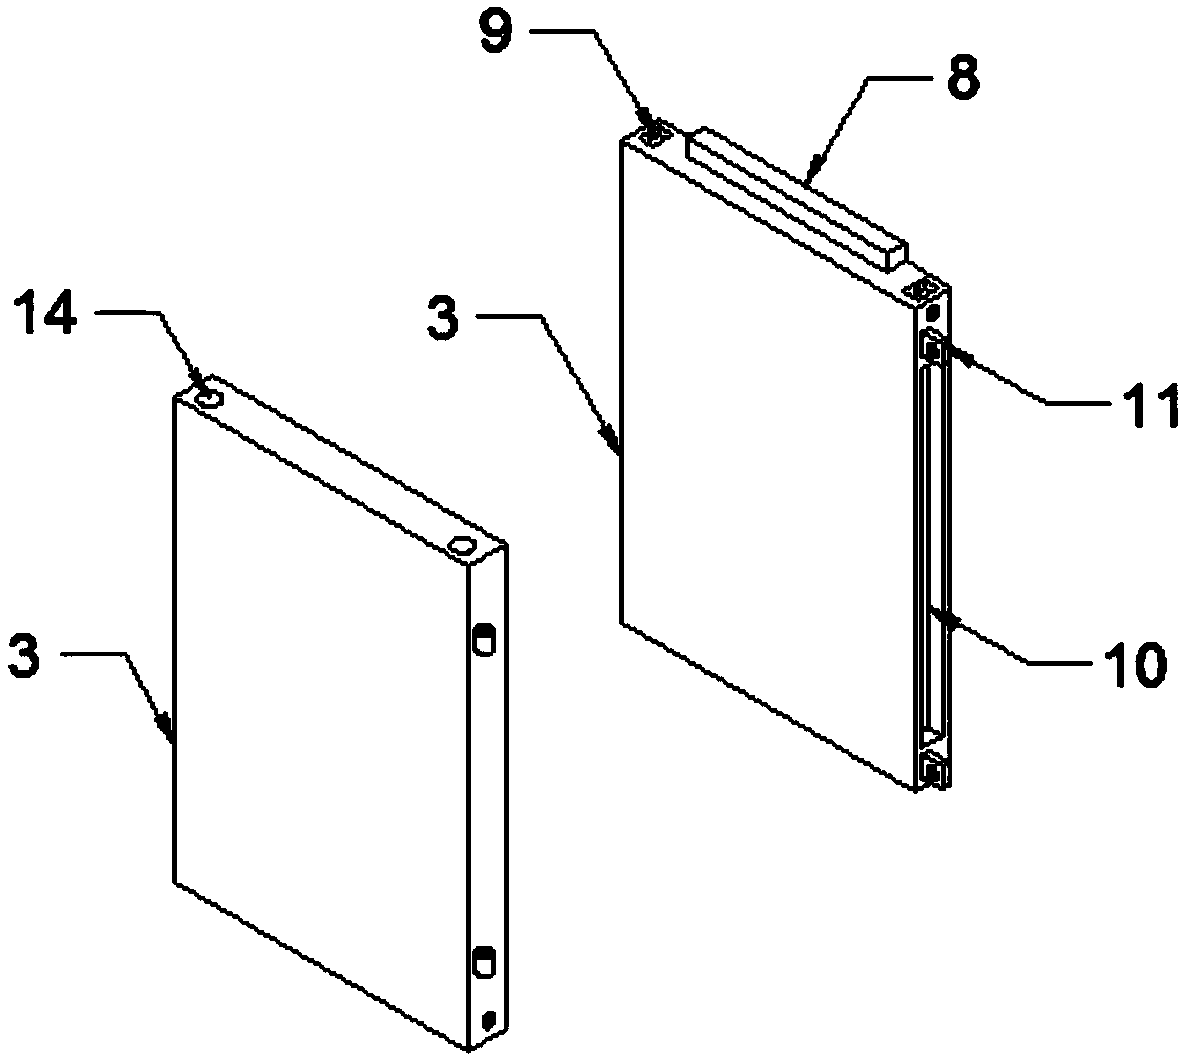 Modular distribution cabinet